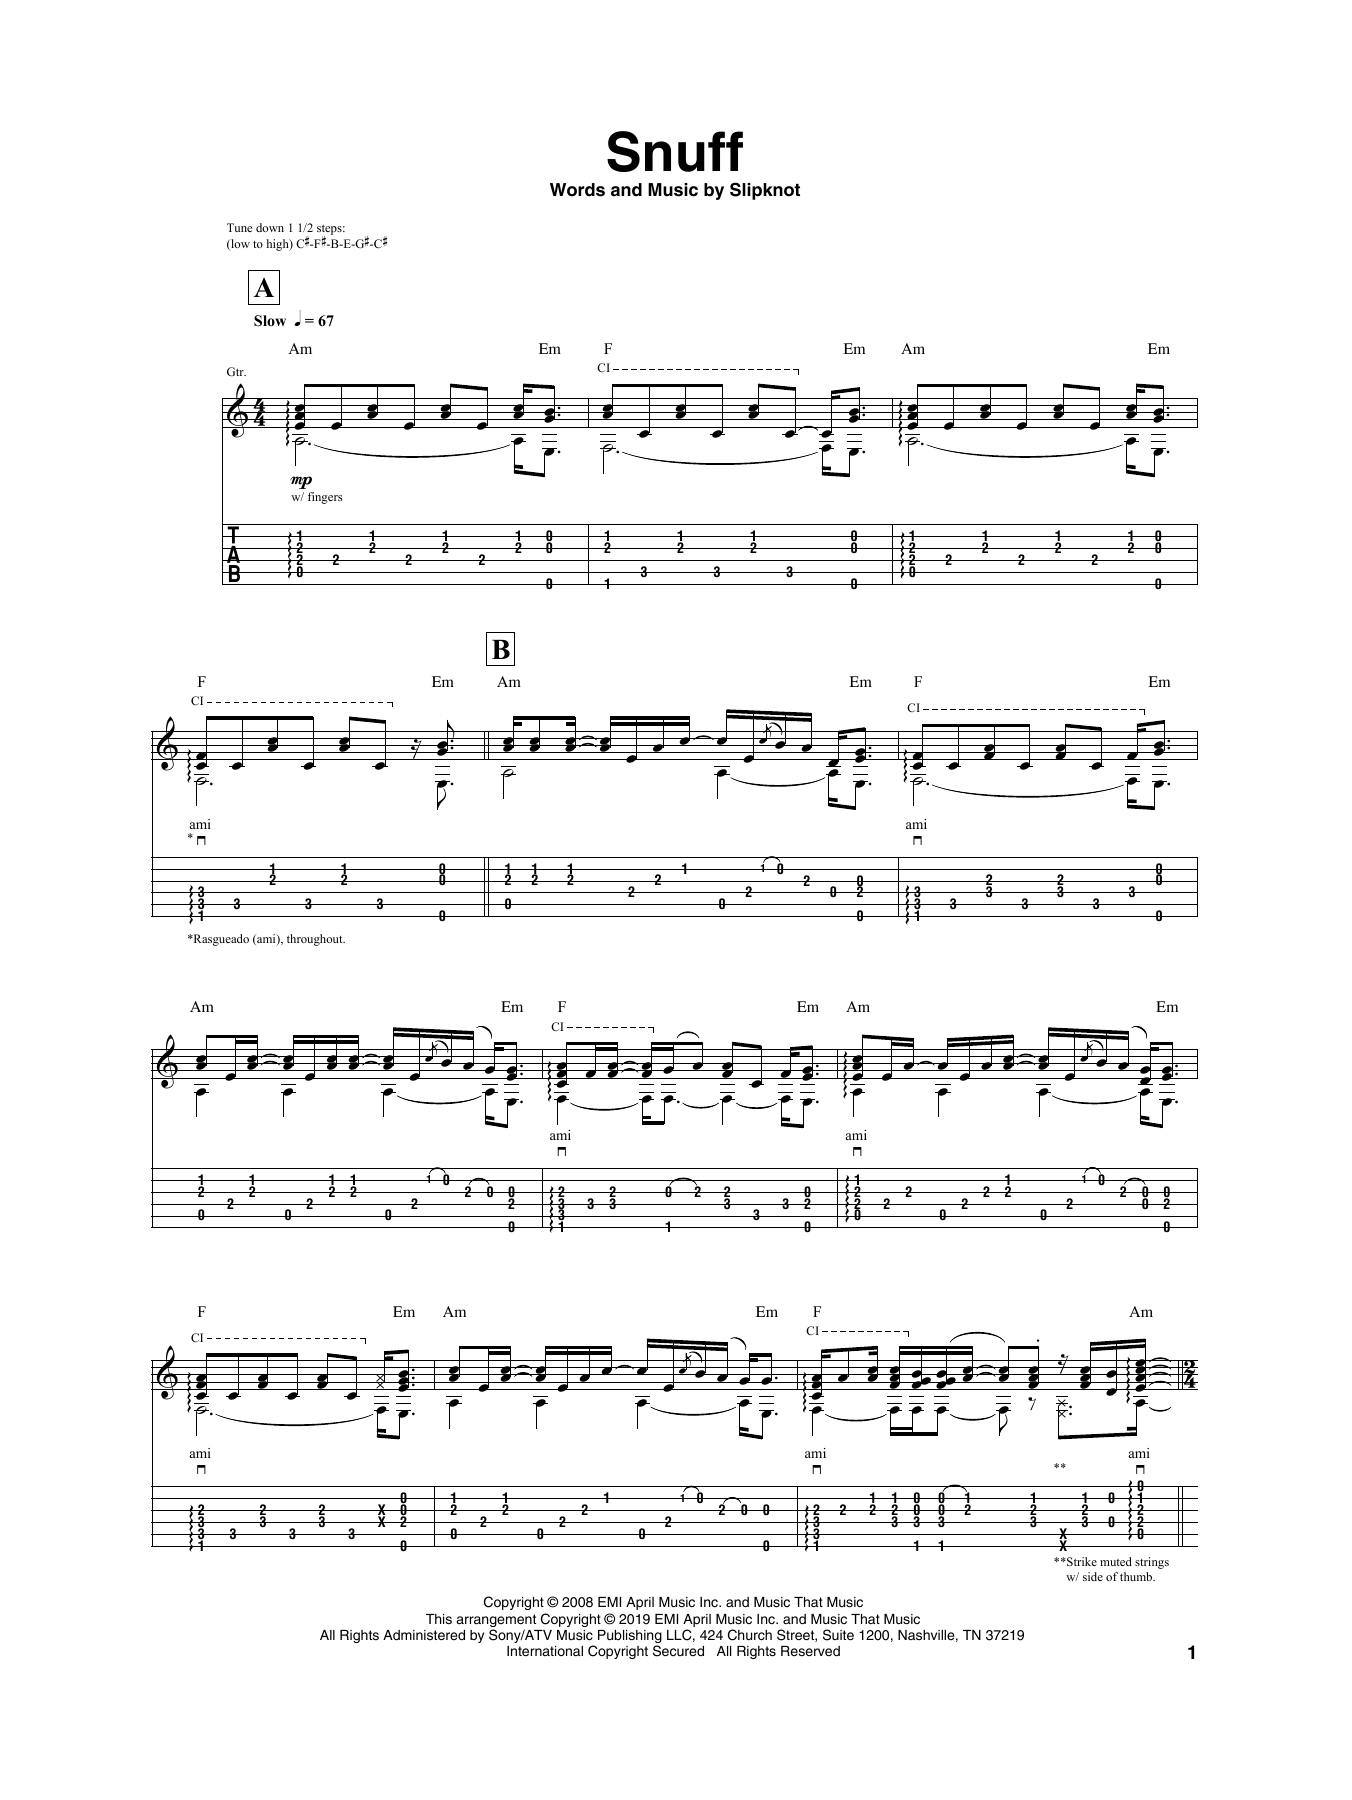 Igor Presnyakov Snuff Sheet Music Notes & Chords for Guitar Tab - Download or Print PDF